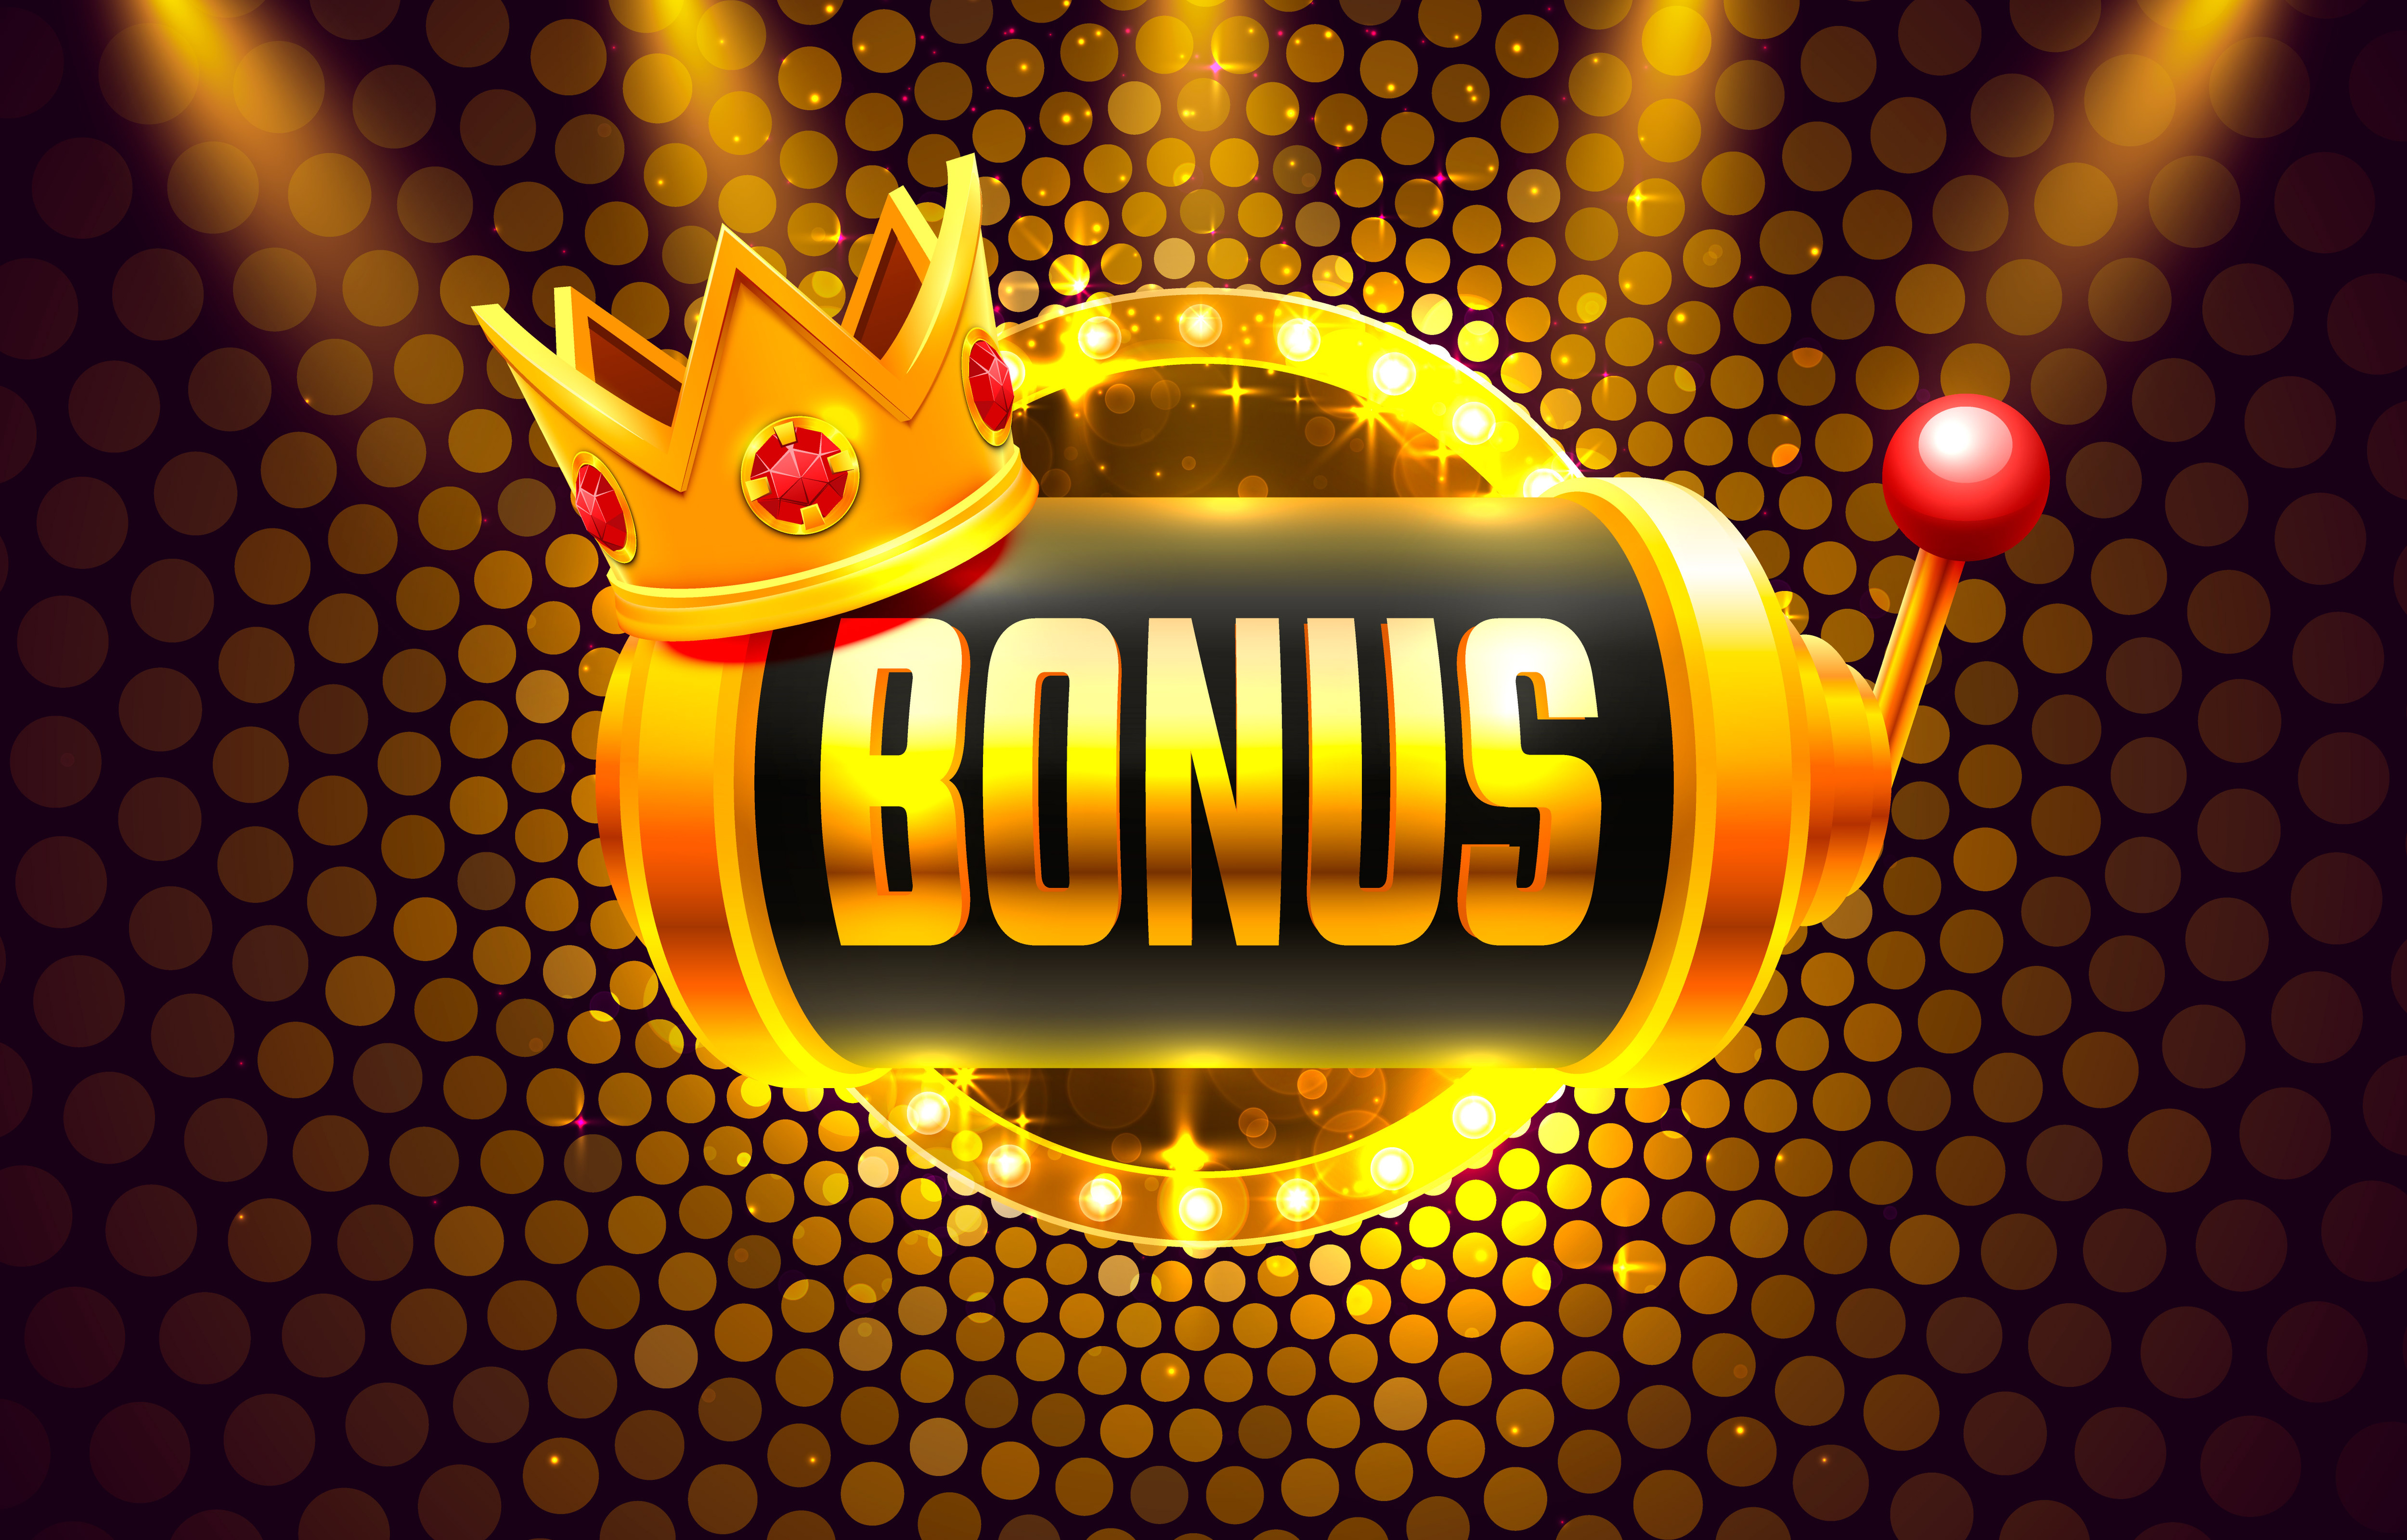 Bonus Angebote und Promotions bei Casino.me